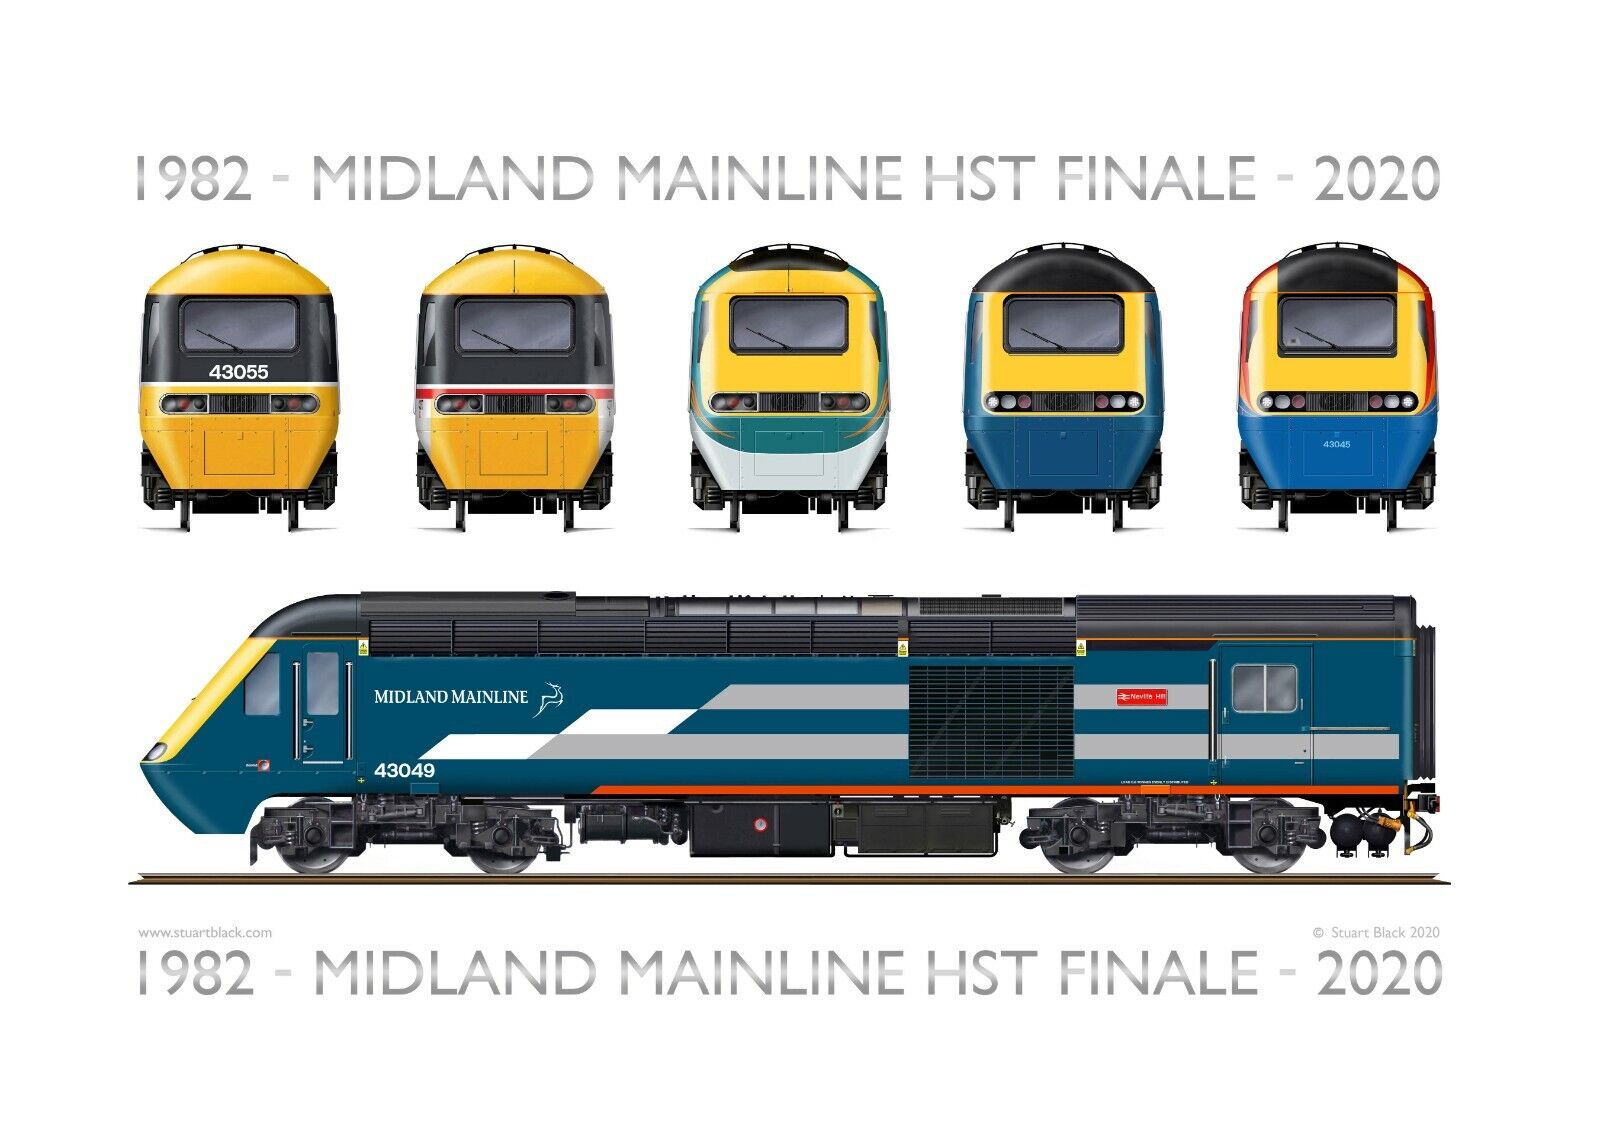 High Speed Train (HST) Print - MML Finale Ver 4 - 43049 Neville Hill